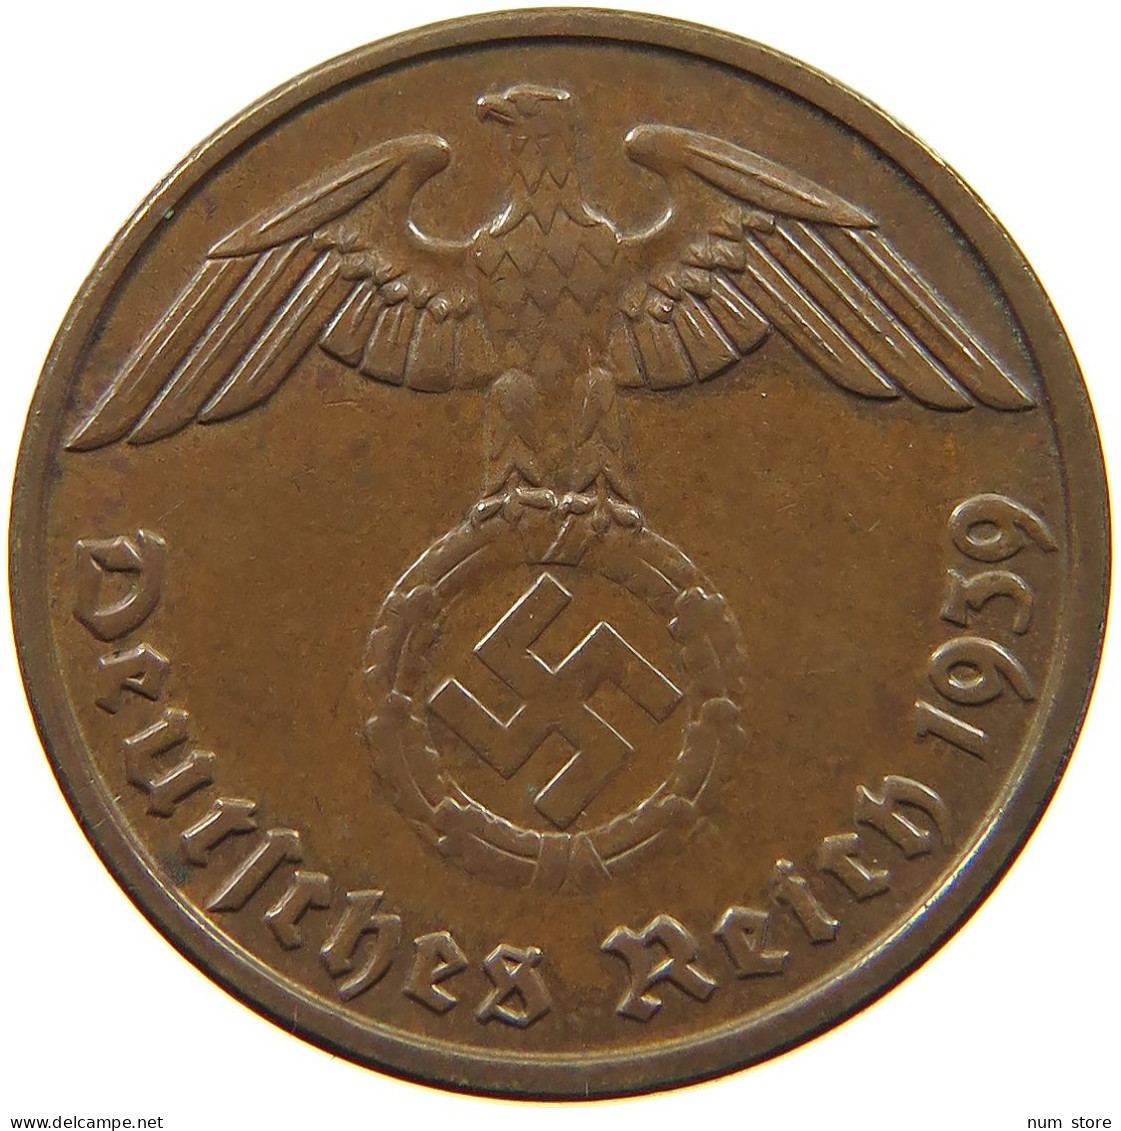 GERMANY 2 PFENNIG 1939 E #a032 0349 - 2 Reichspfennig